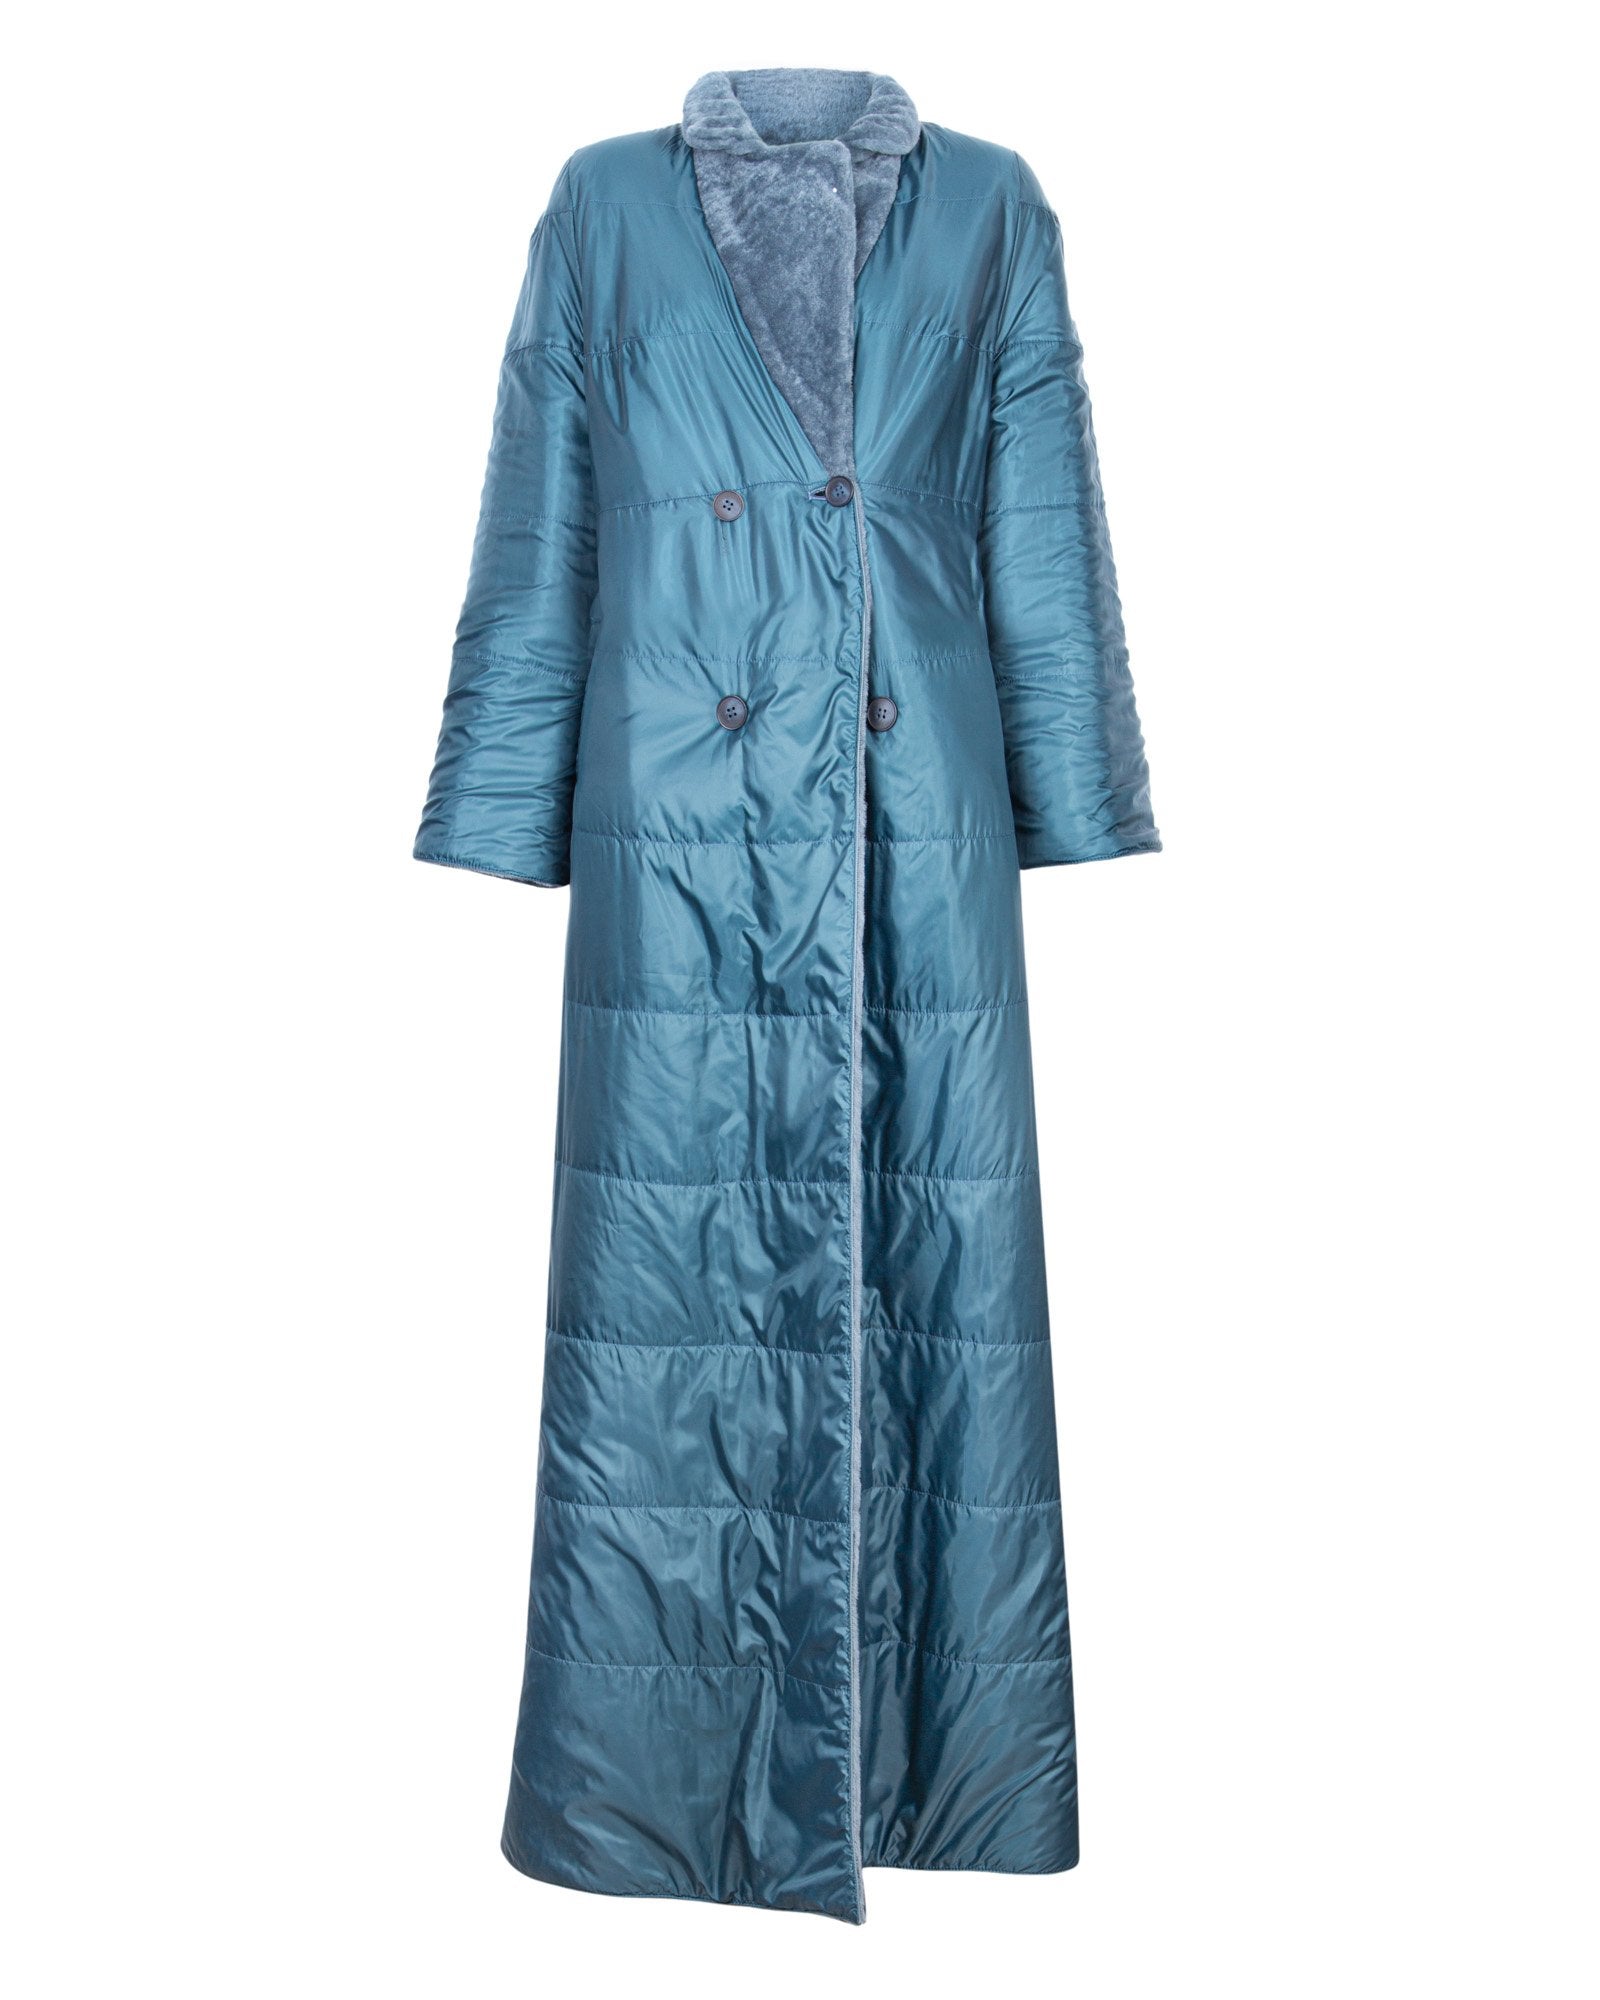 Blue Long Shearling Coat